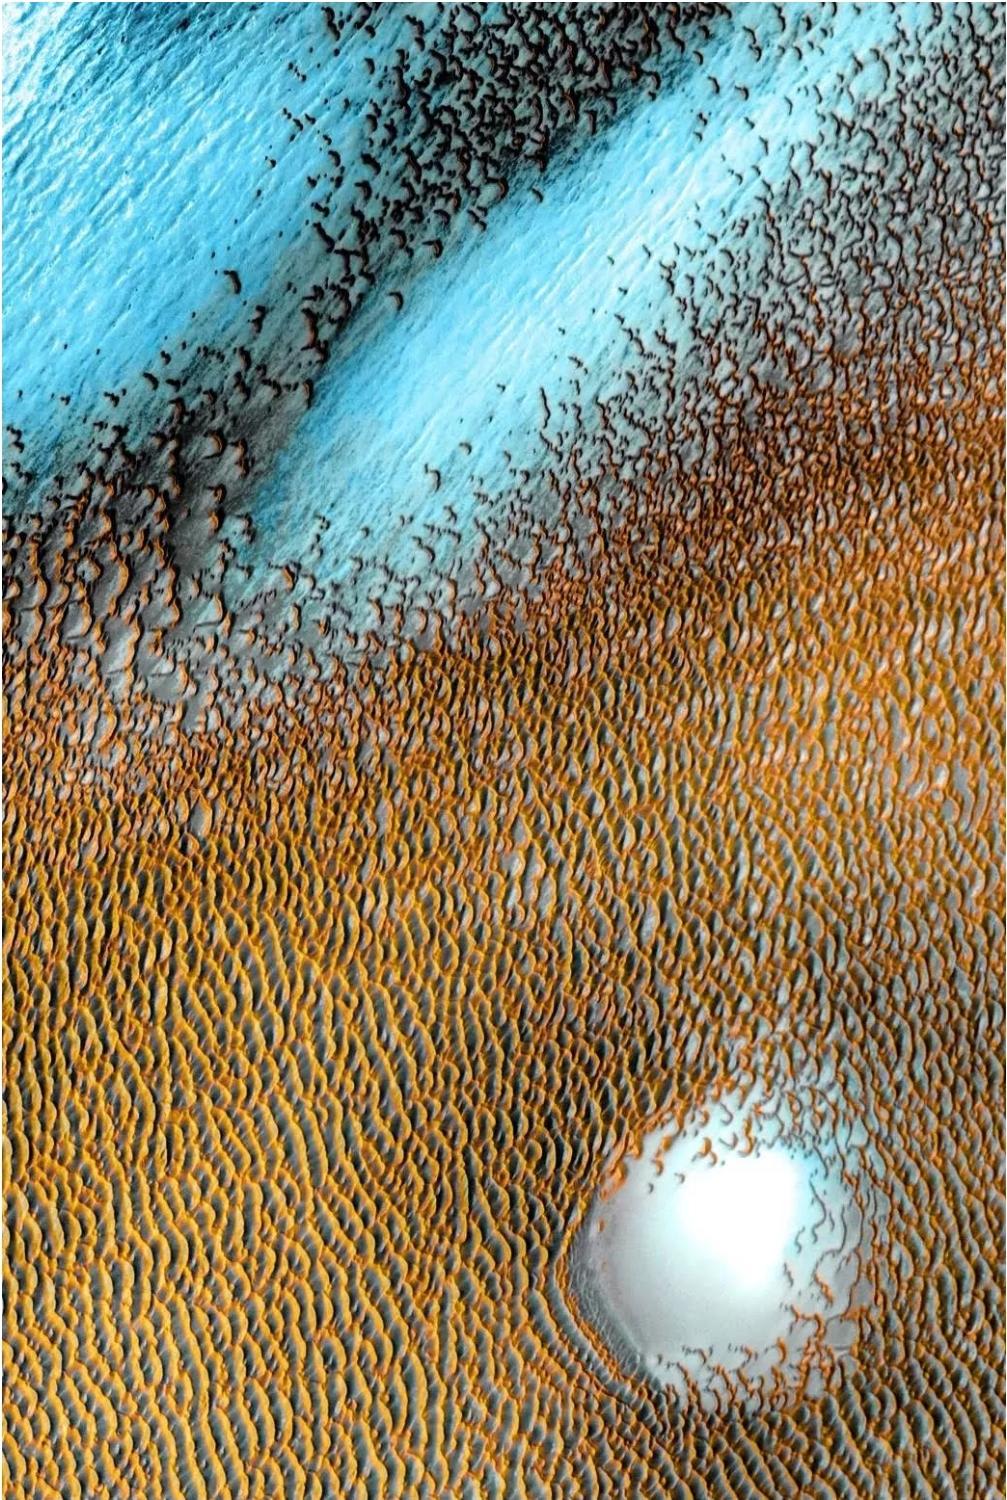 NASA releases stunning photo of beautiful blue dunes on Mars